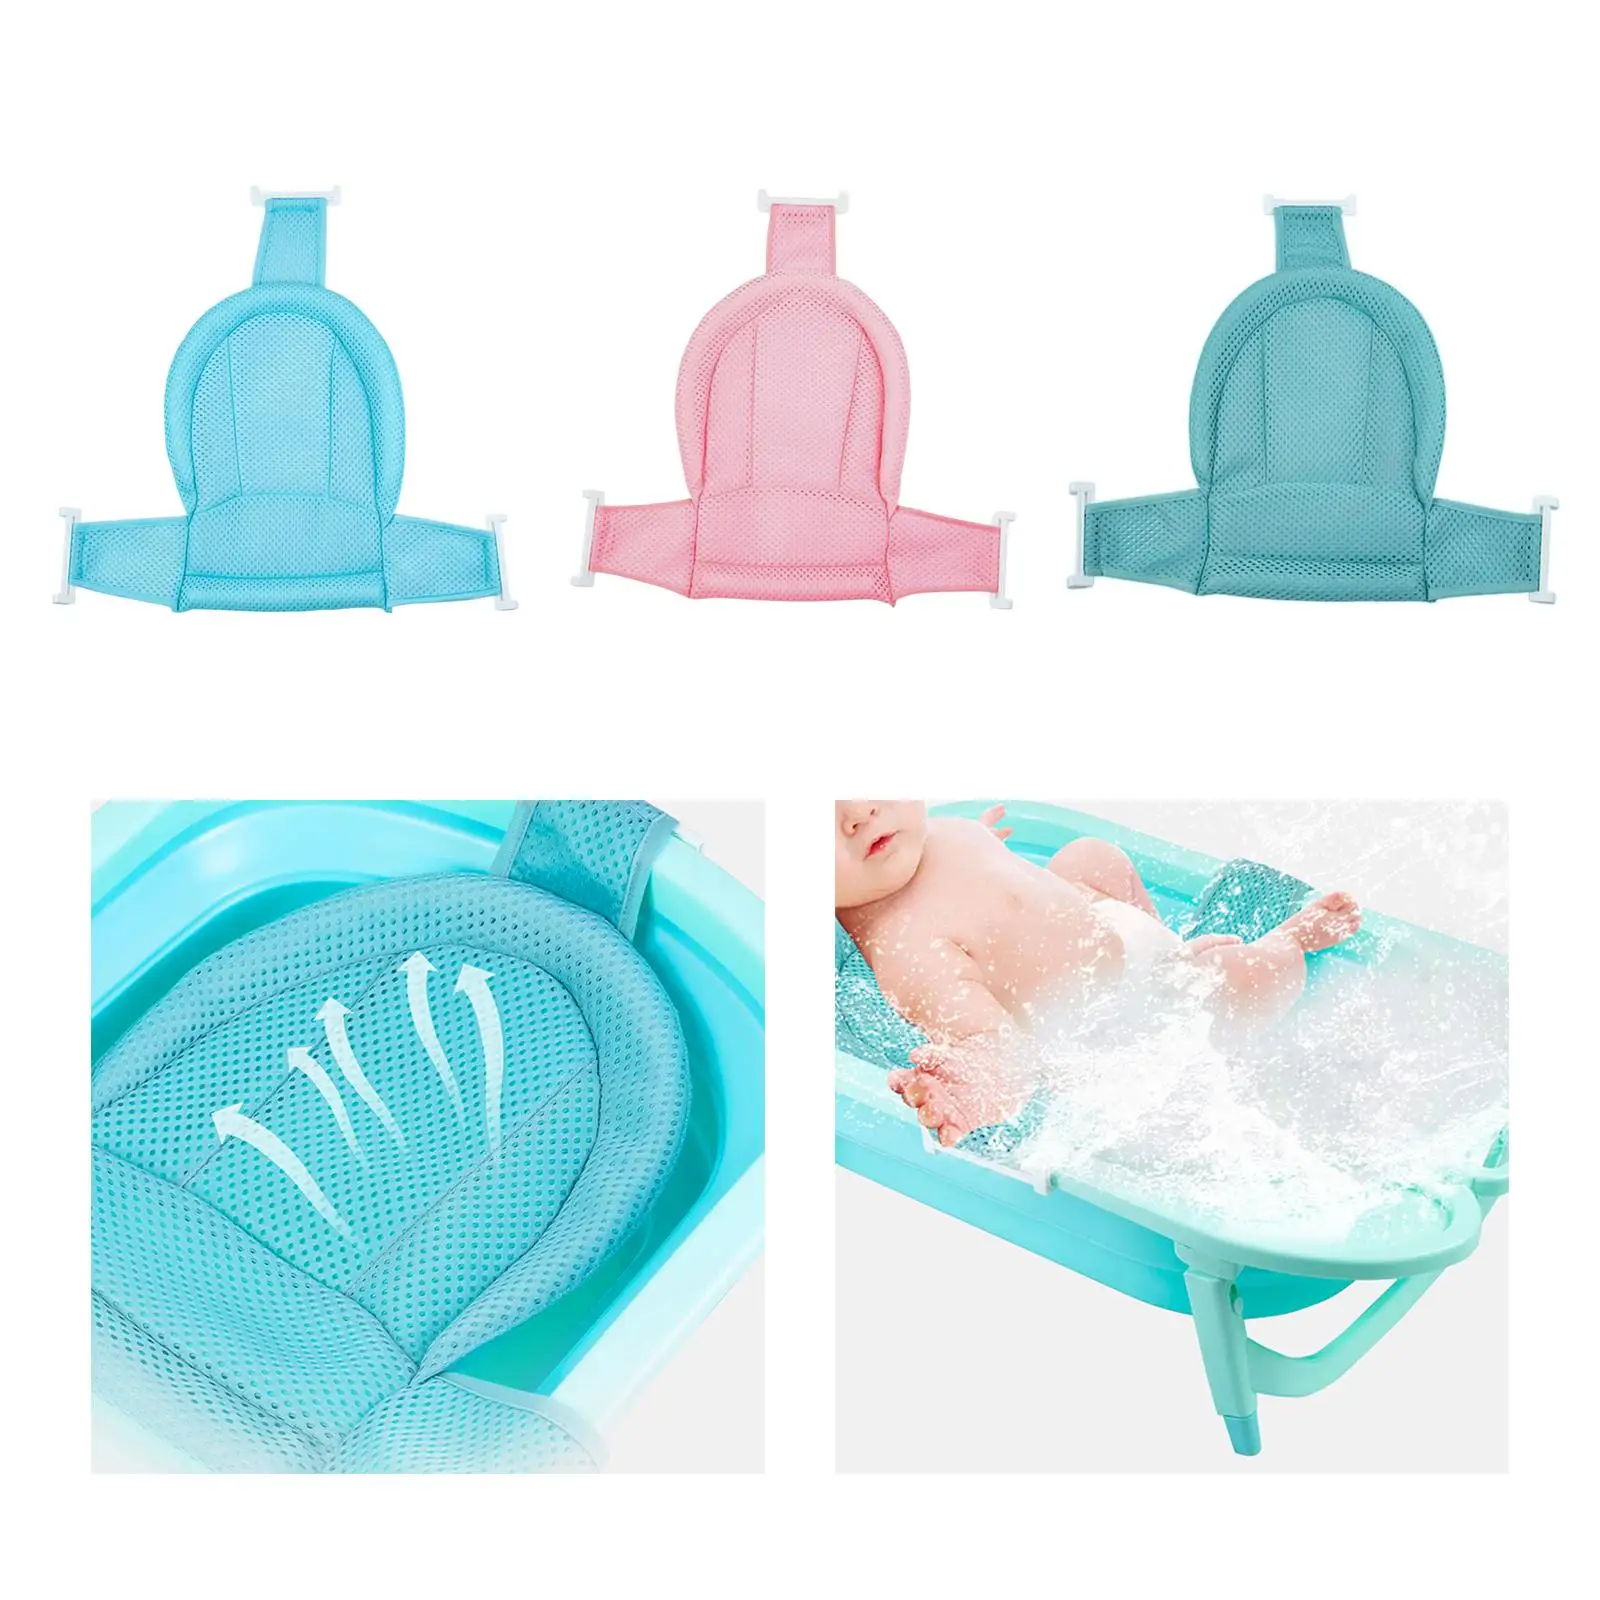 Universal Baby Bath Seat Support Net First Year Needs Baby Shower Mat Nonslip Baby Bath Cushion Pad for Newborn Boy Girl Infant